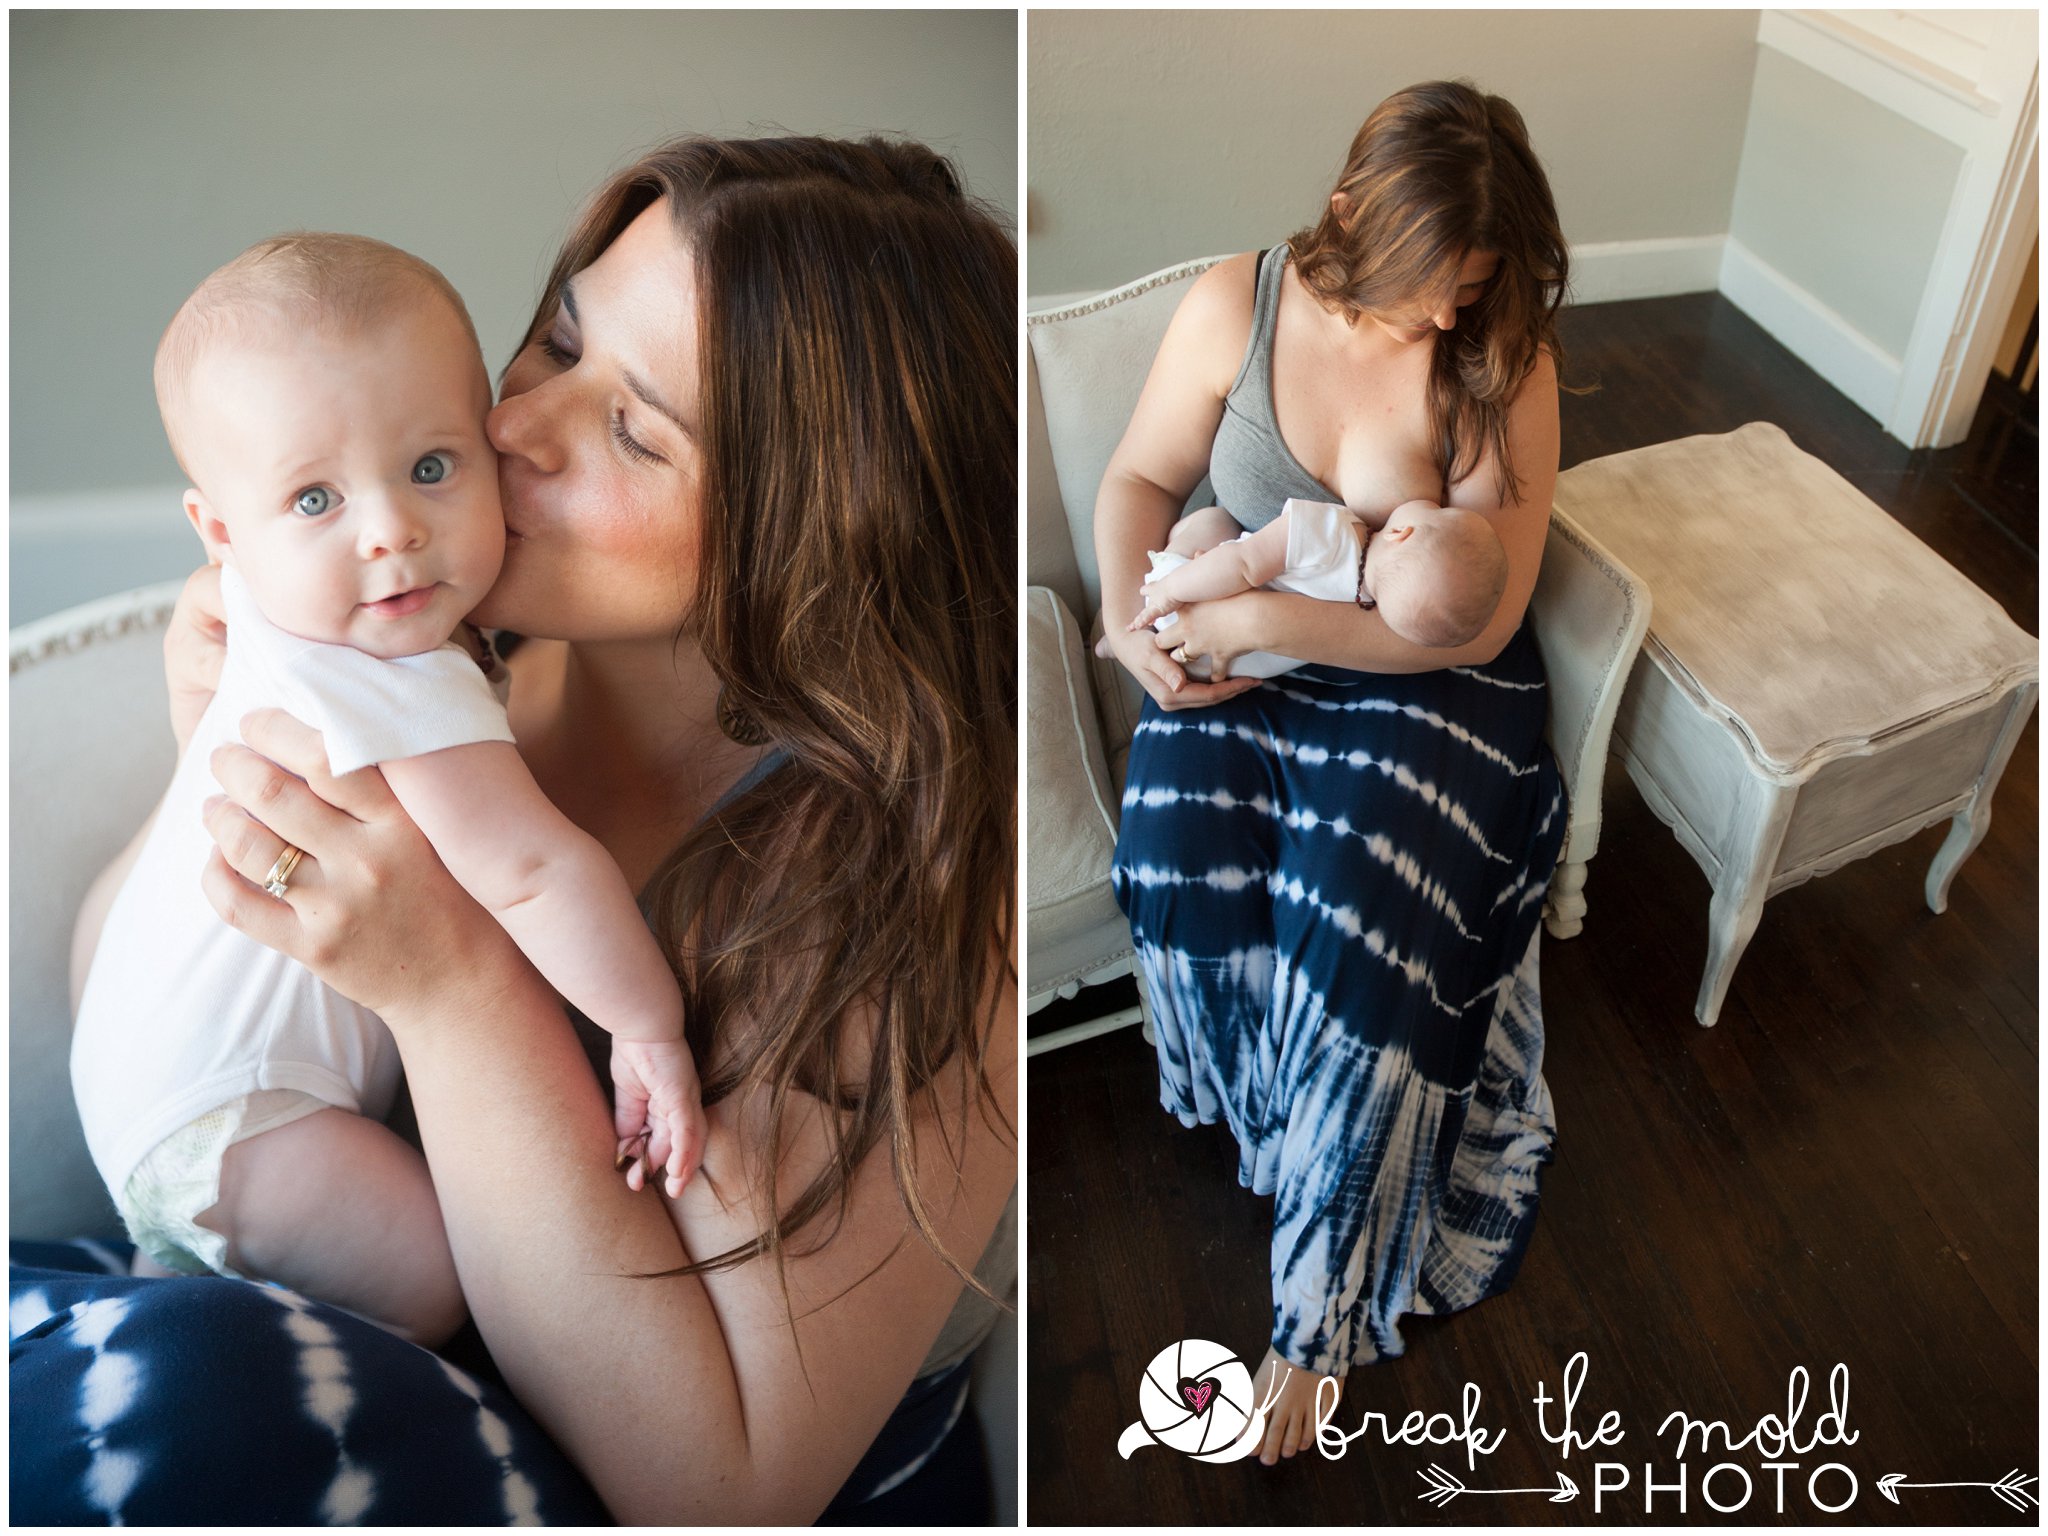 break-the-mold-photo-nursing-body-love-baby-pregnant-women-powerful-breastfeeding-sessions_7239.jpg